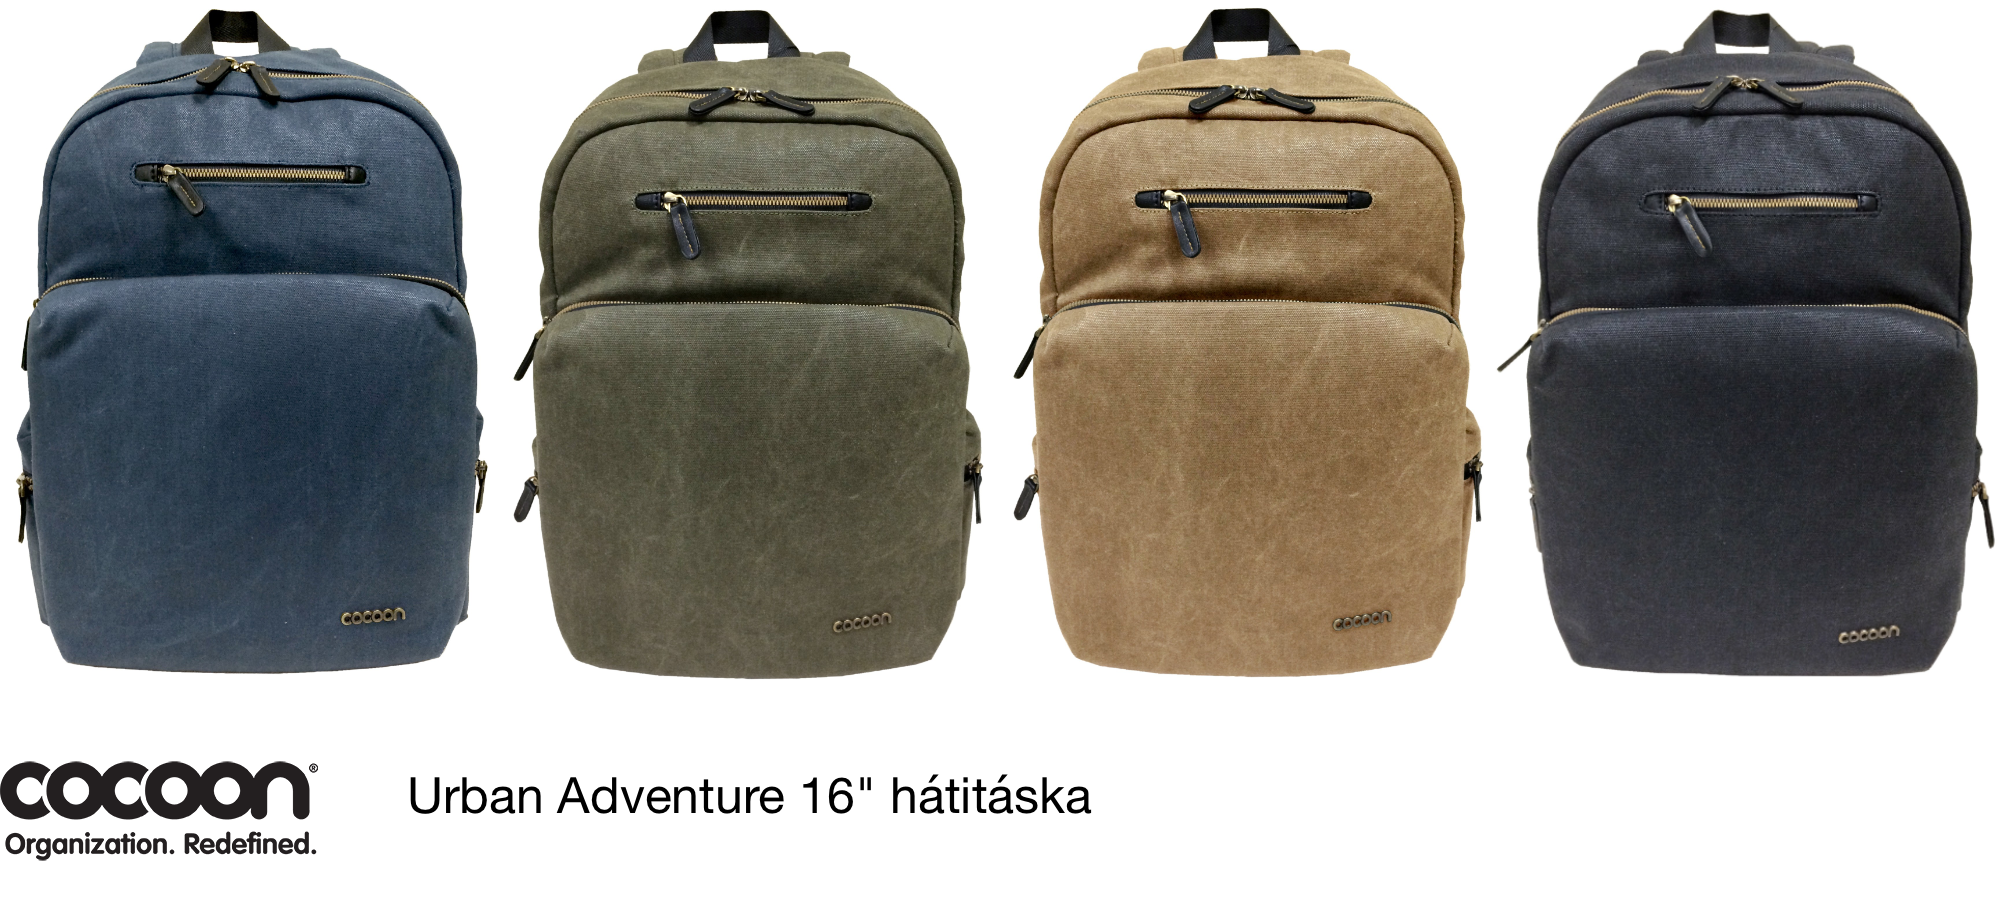 Cocoon Urban Adventure 16" Backpack